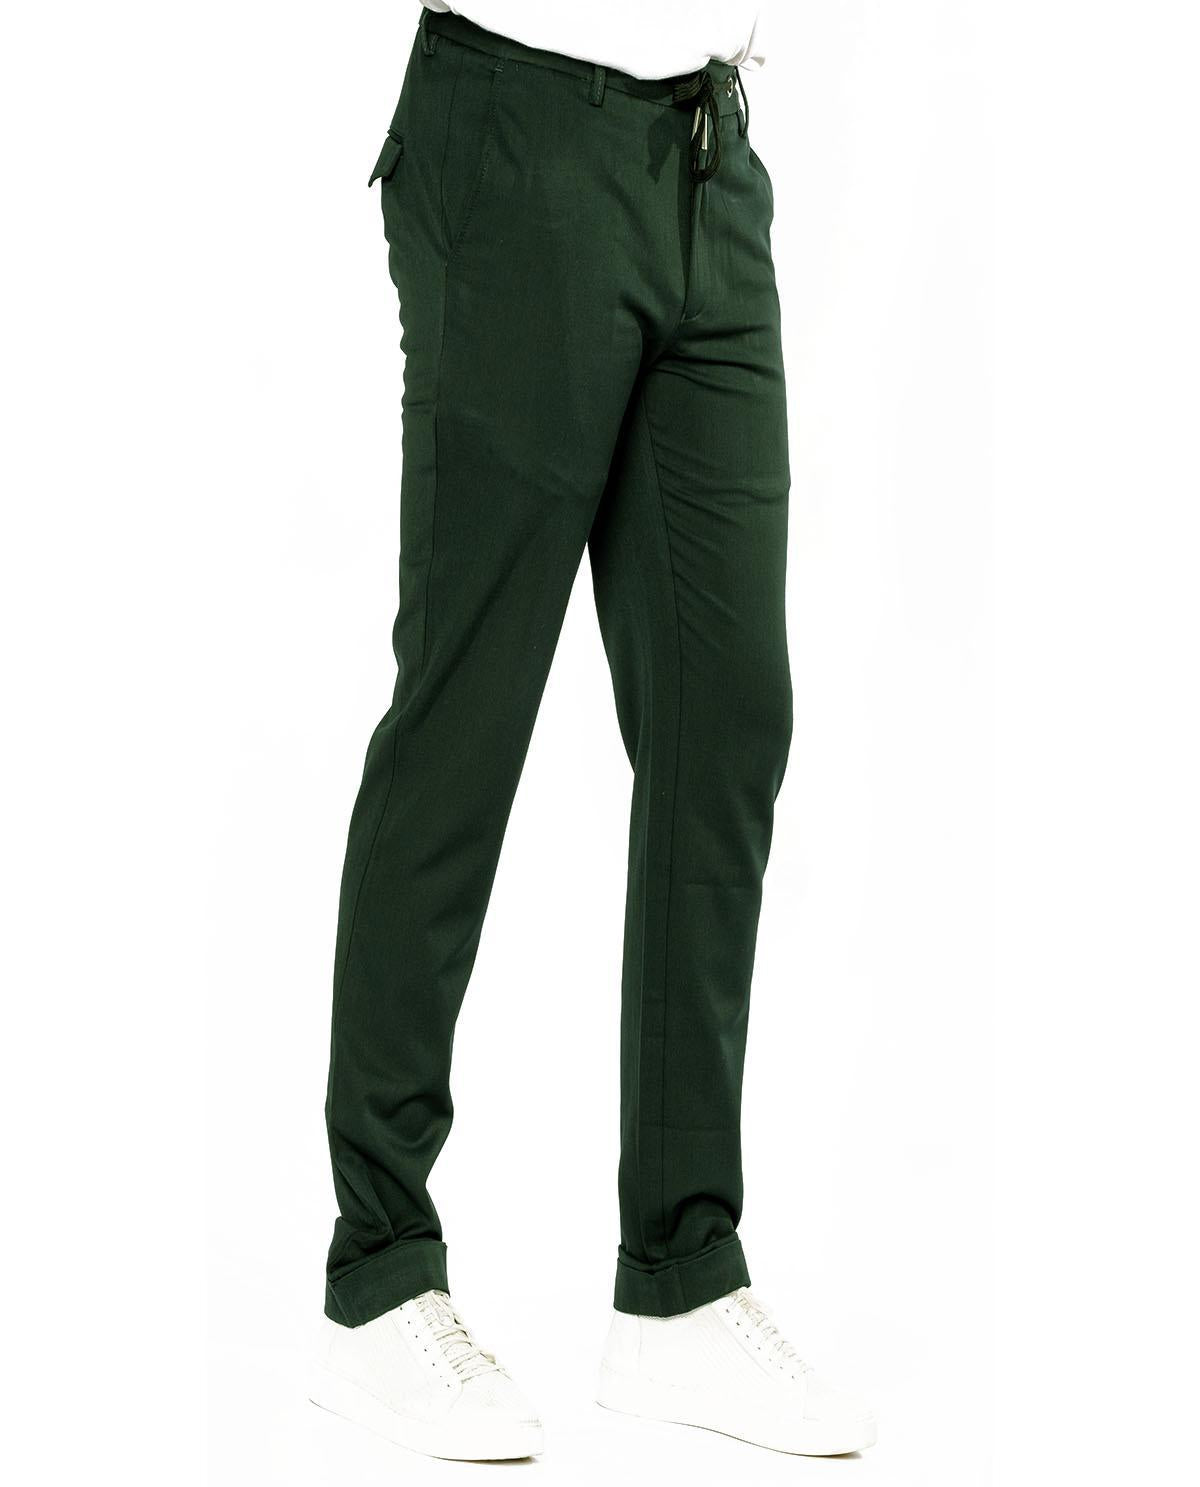 Pantalon vert avec revers